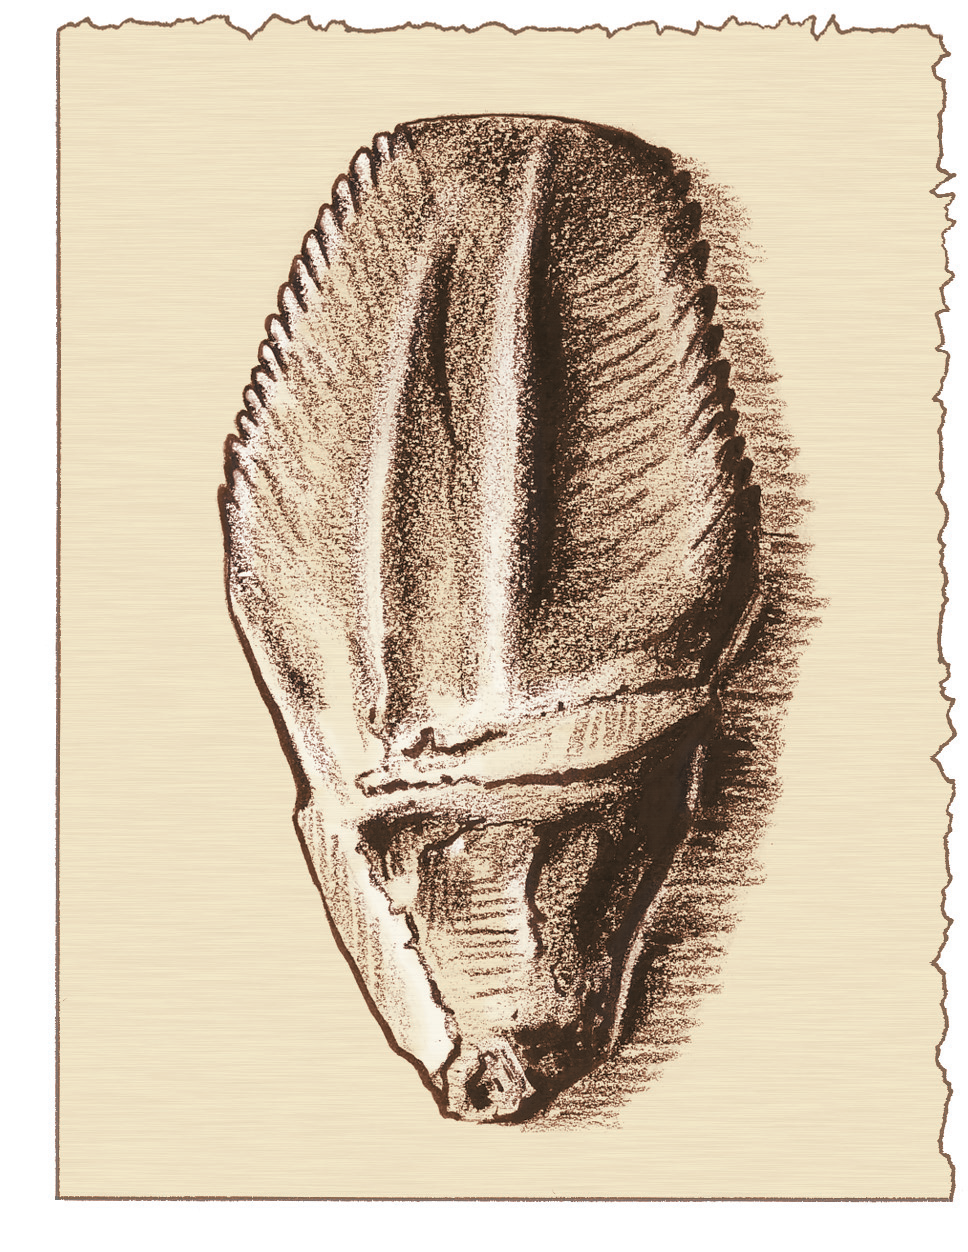 Dibujo a tamaño real del diente fósil